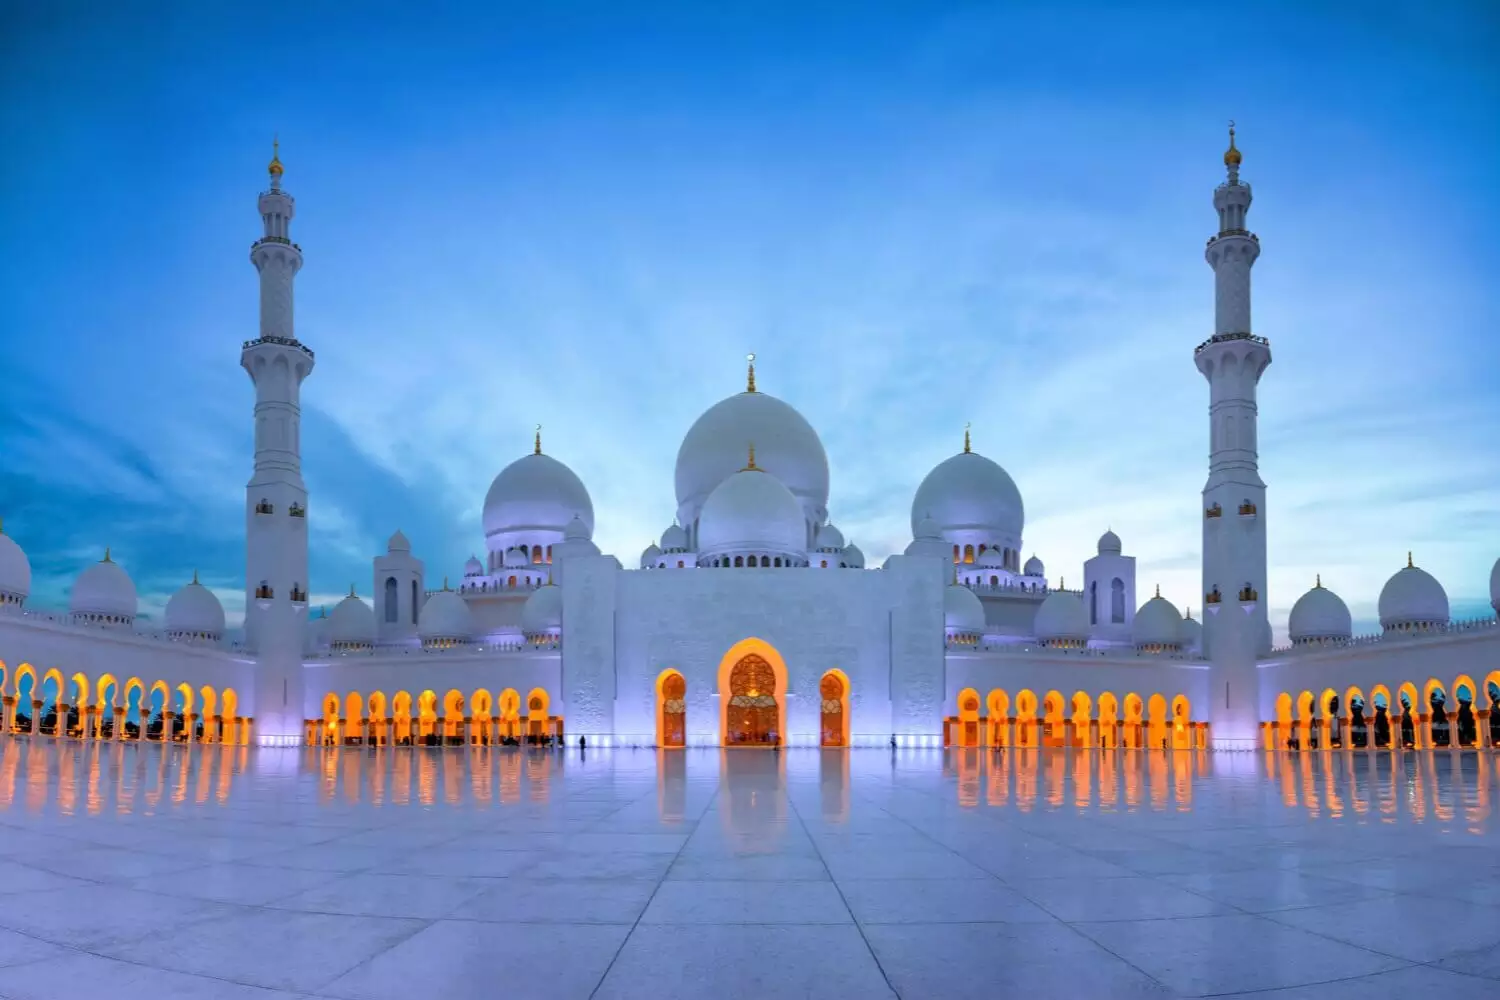 Sheikh-Zayed-Grand-Mosque